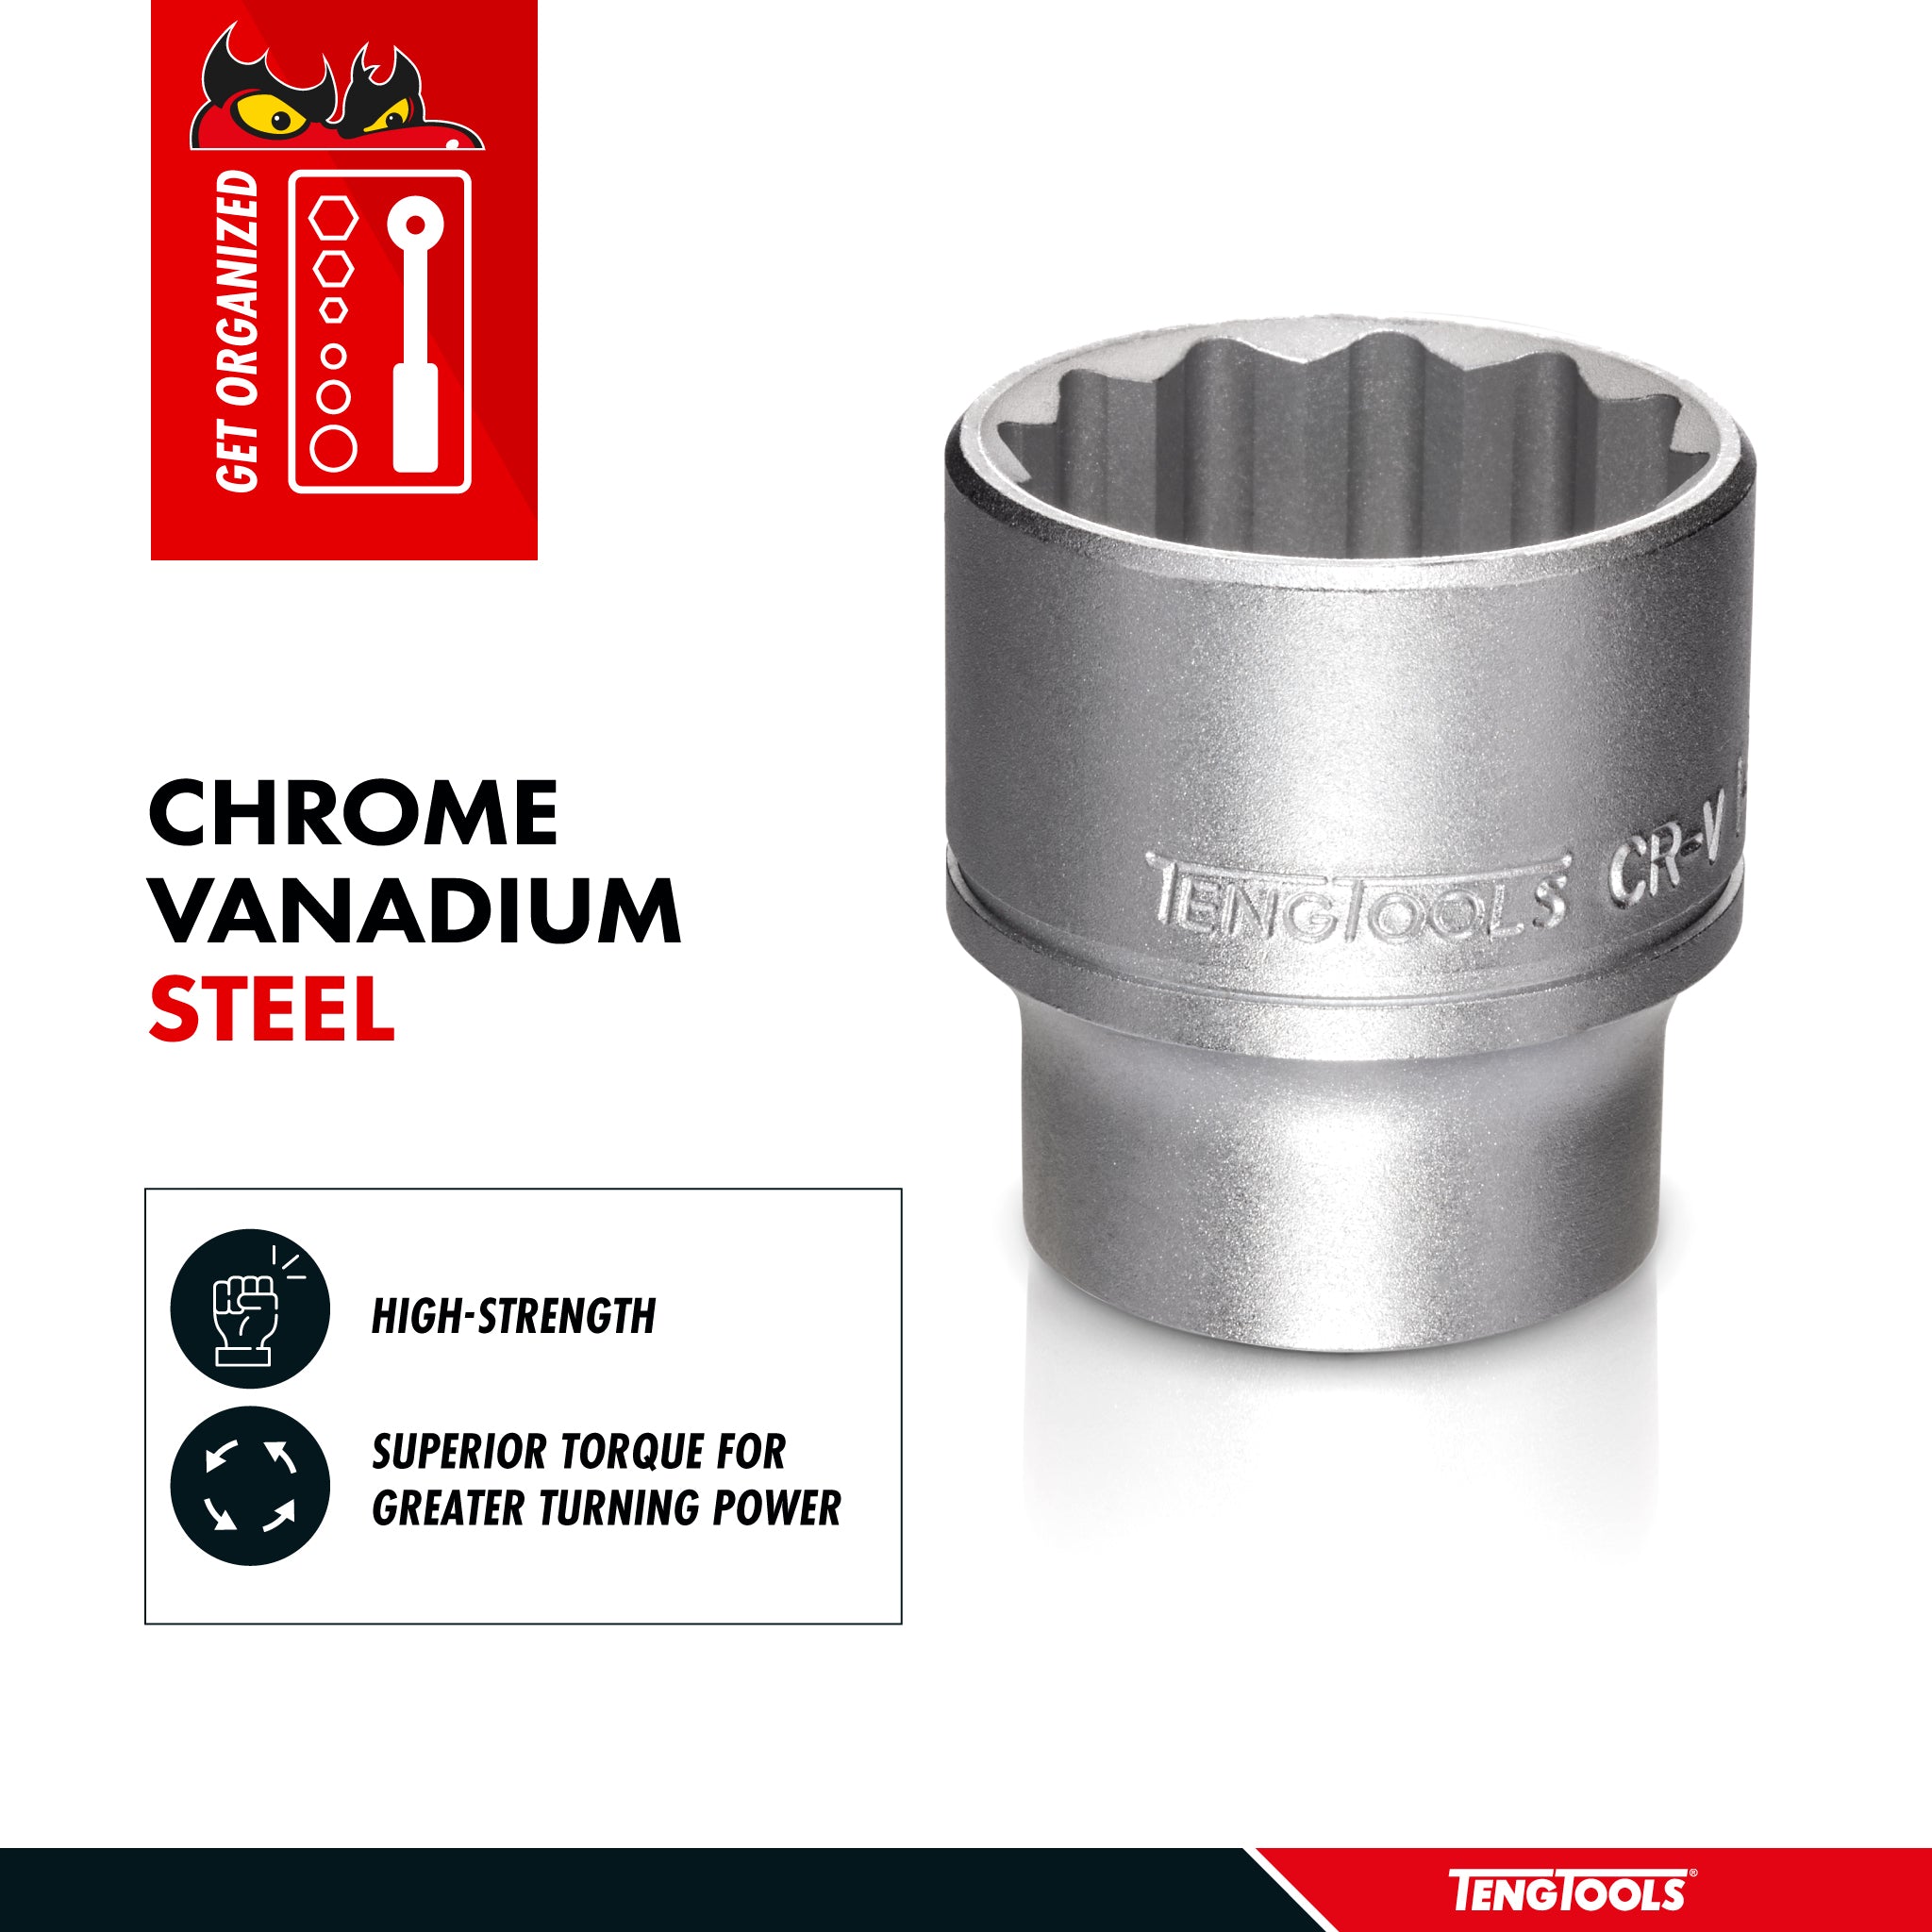 Teng Tools 1/2 Inch Drive 12 Point SAE Shallow Chrome Vanadium Sockets - 1-3/16